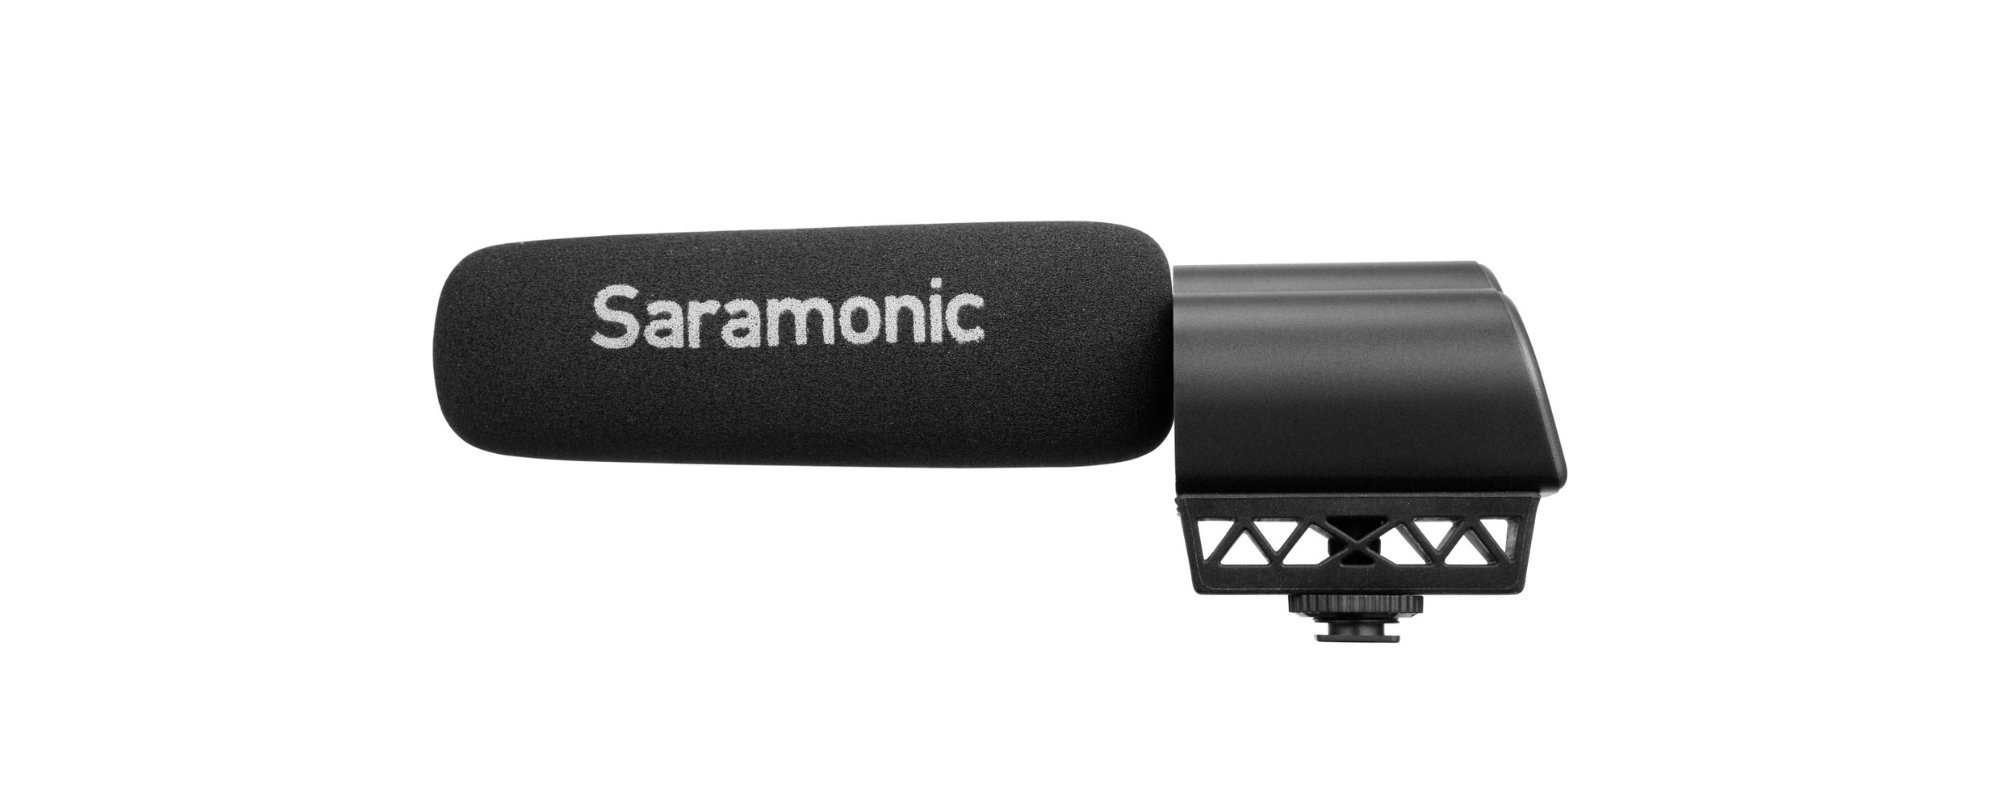 Saramonic Vmic Pro Mark II Kondensatormikrofon für Kameras und Camcorder